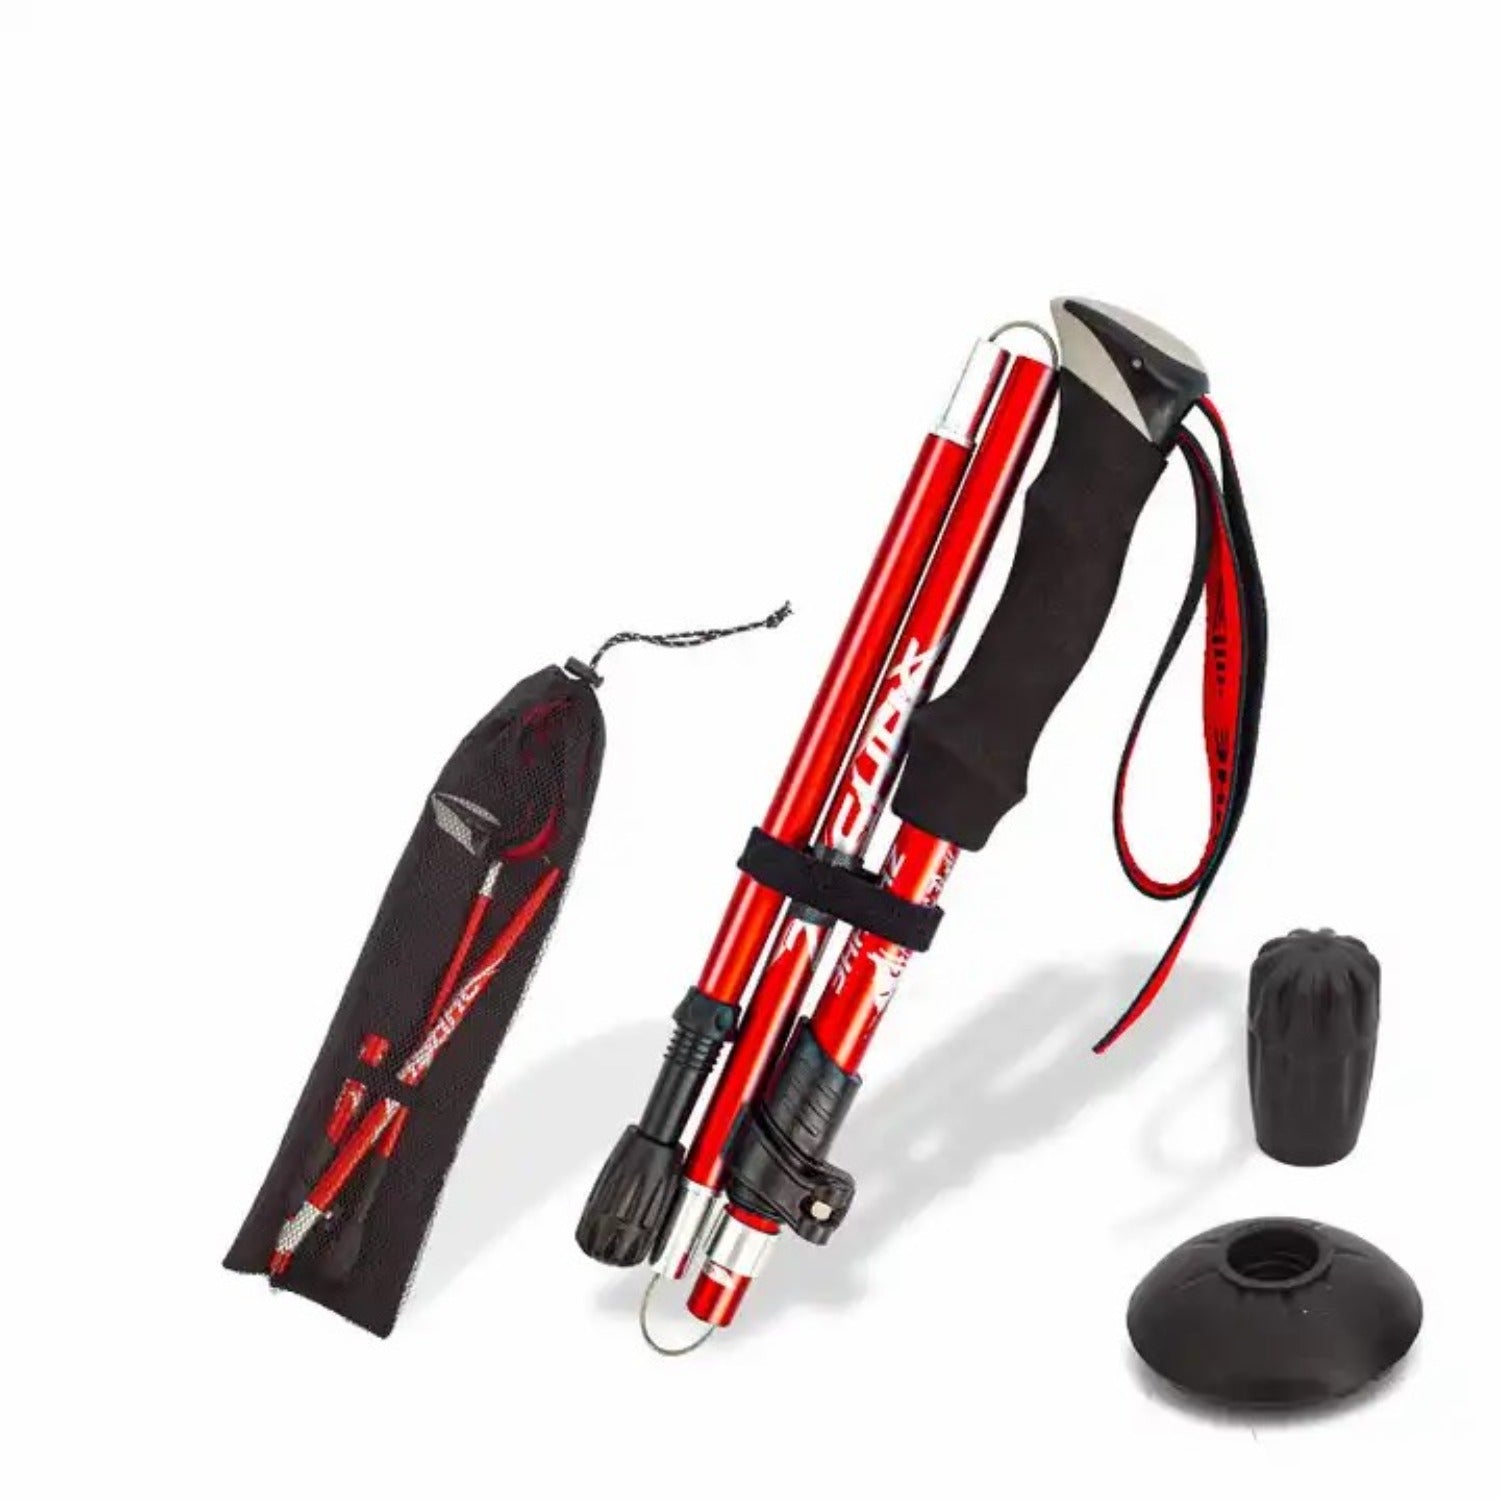 Buy Gokyo K2 Foldable Trekking Pole 33 Cms Red | Trekking Pole at Gokyo Outdoor Clothing & Gear